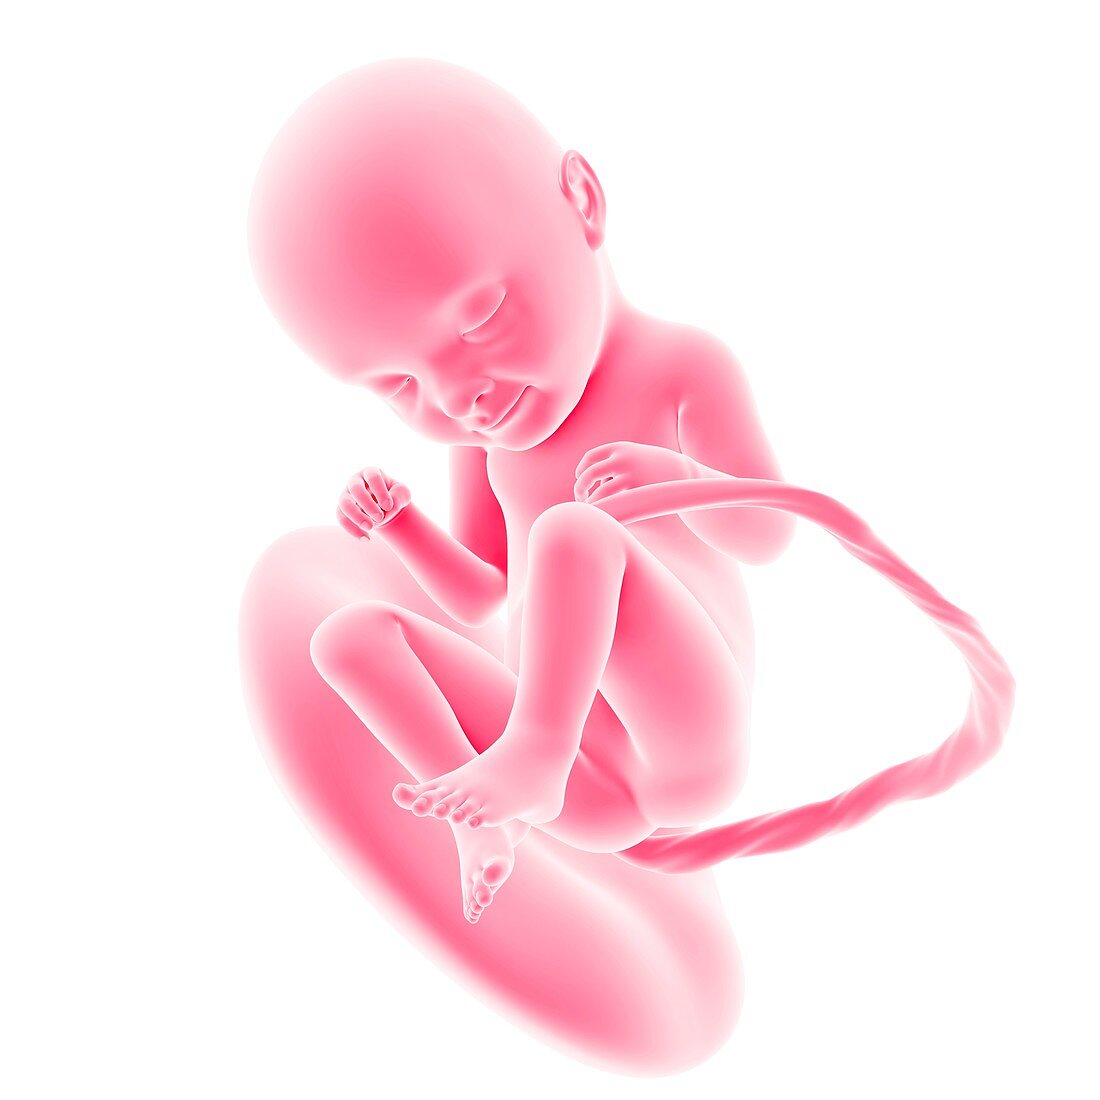 Human fetus age 33 weeks